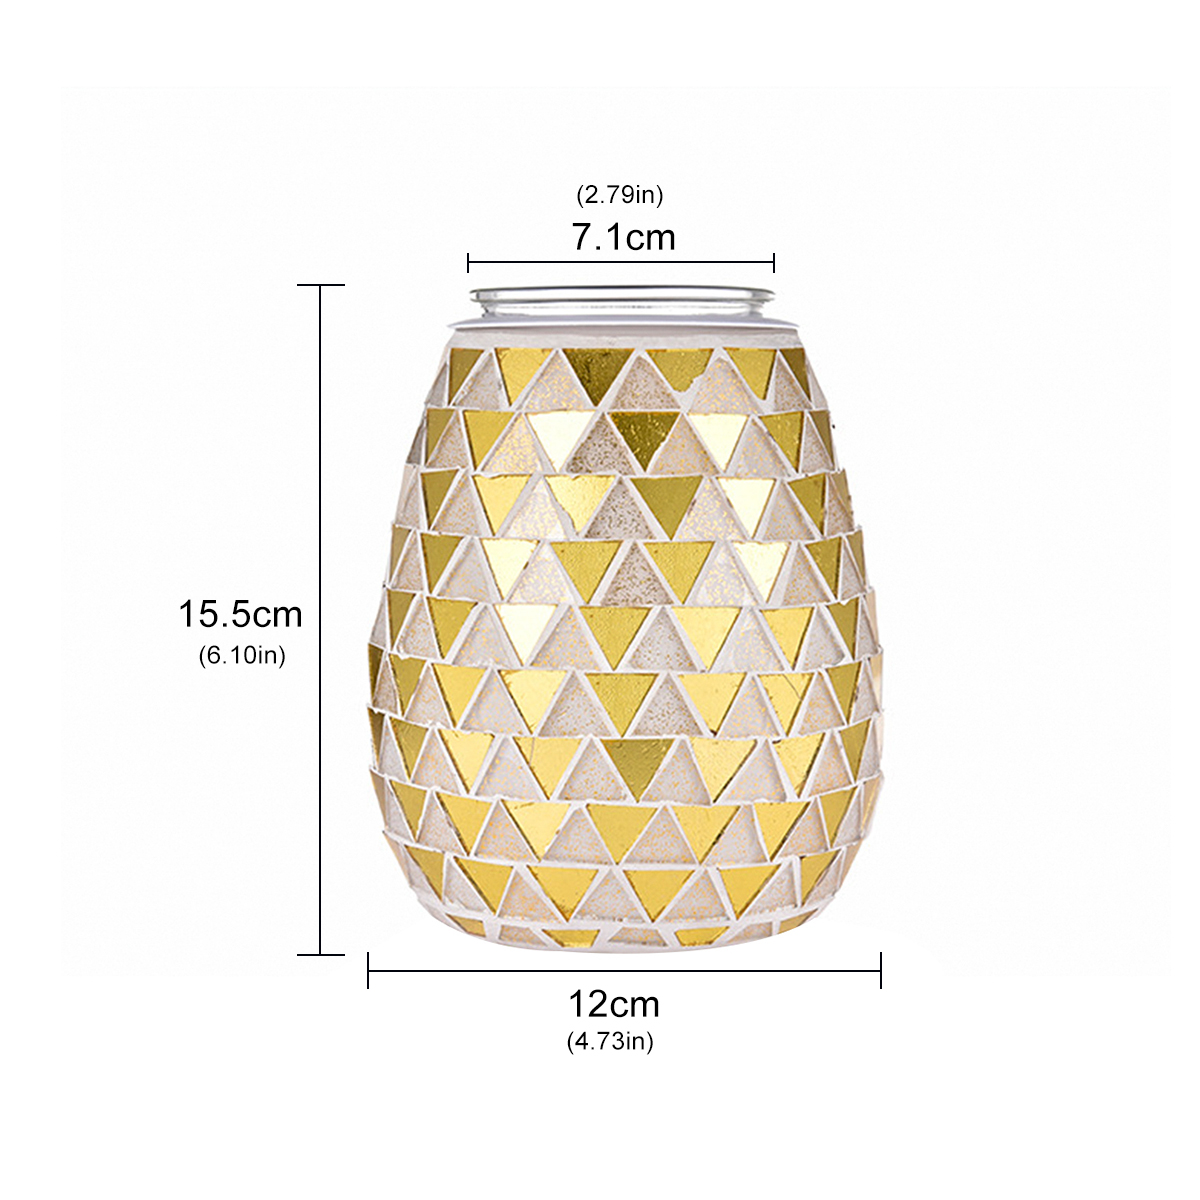 3D-Glass-Electric-Aromatherapy-Lamp-Triangle-Pattern-Warm-White-Lights-Home-Aromatherapy-Light-1837761-2